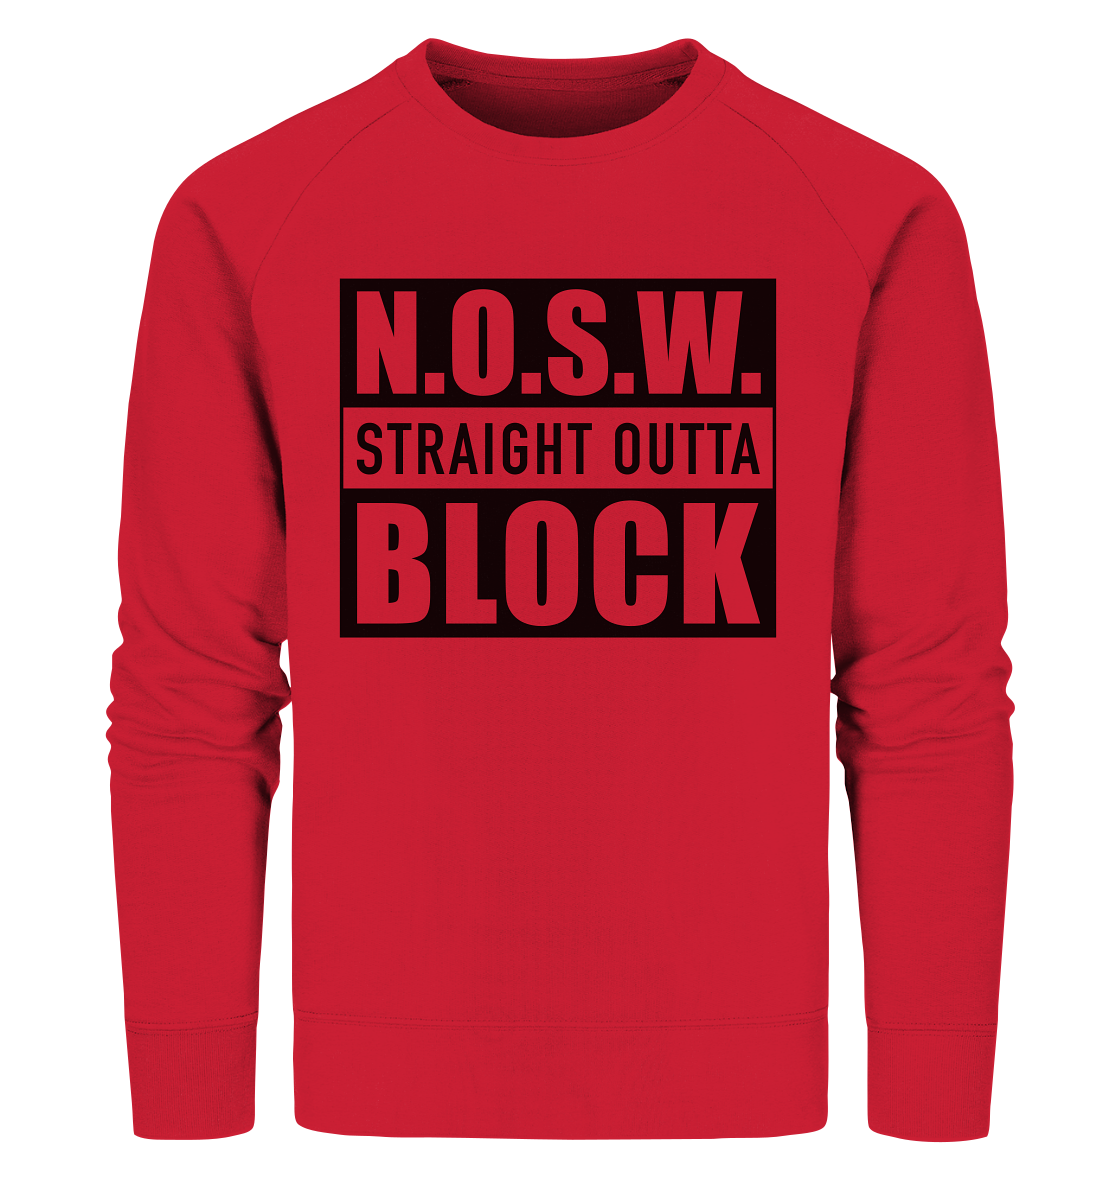 N.O.S.W. BLOCK Sweater "STRAIGHT OUTTA" Männer Organic Sweatshirt rot